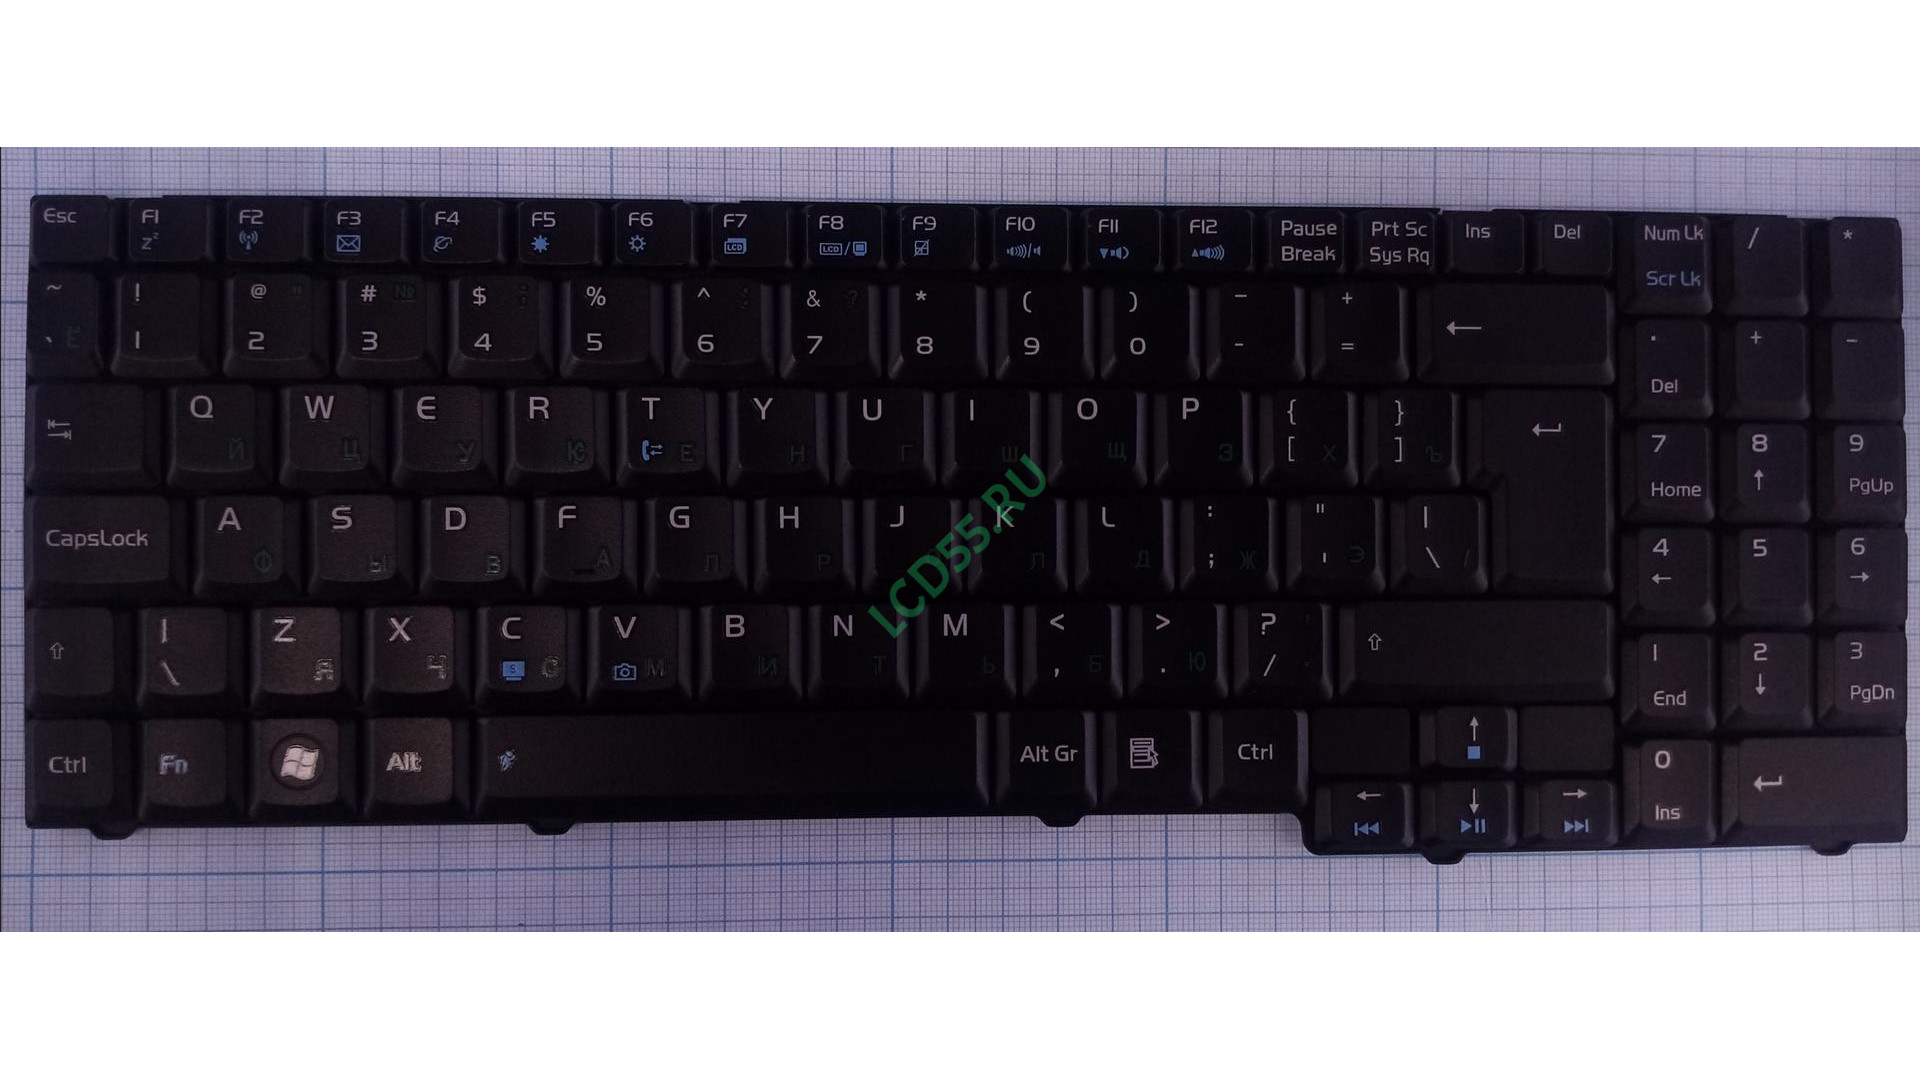 Клавиатура Asus G70, M70, M50, X71 (9J.N0B82.10R, 04GNED1KRU00-1) (черная)